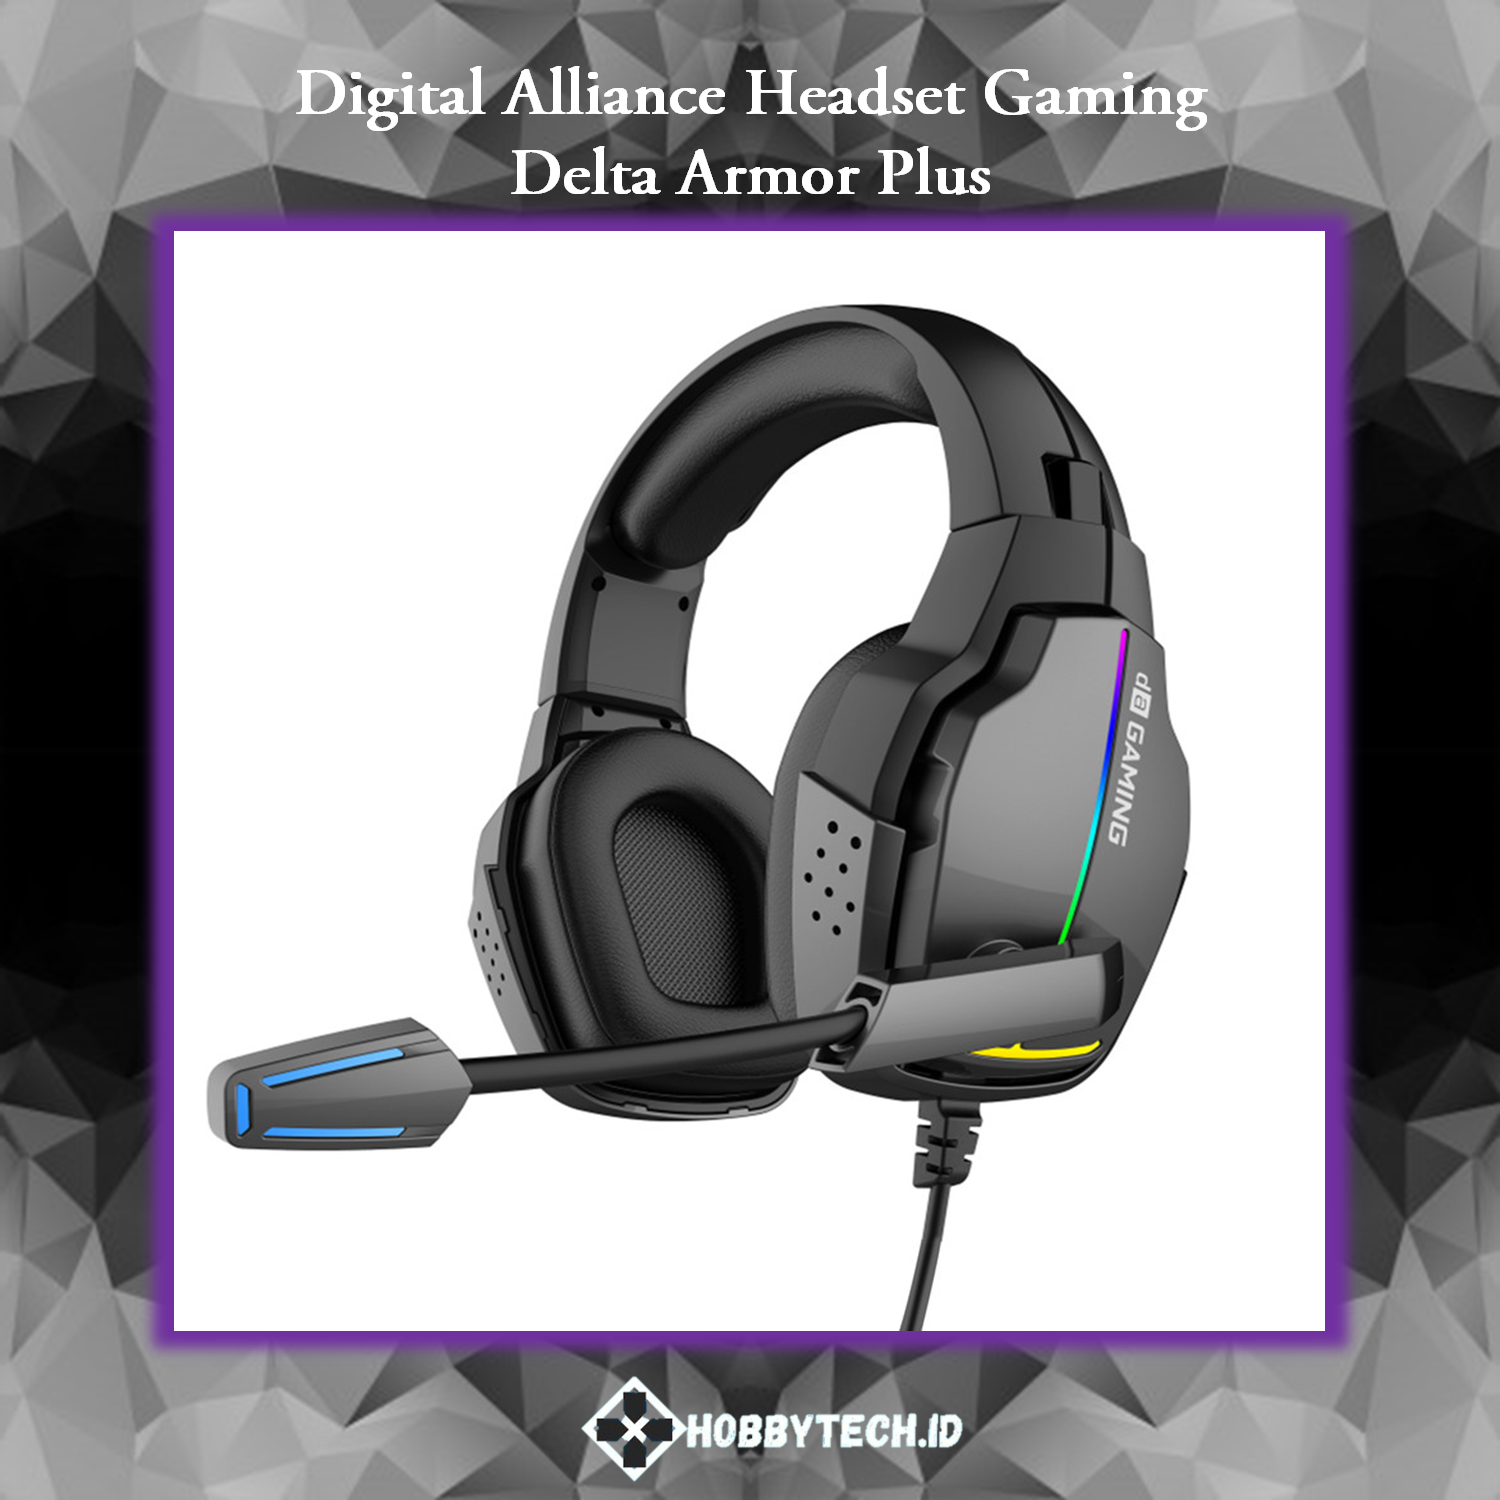 Digital Alliance Headset Gaming Delta Armor Plus